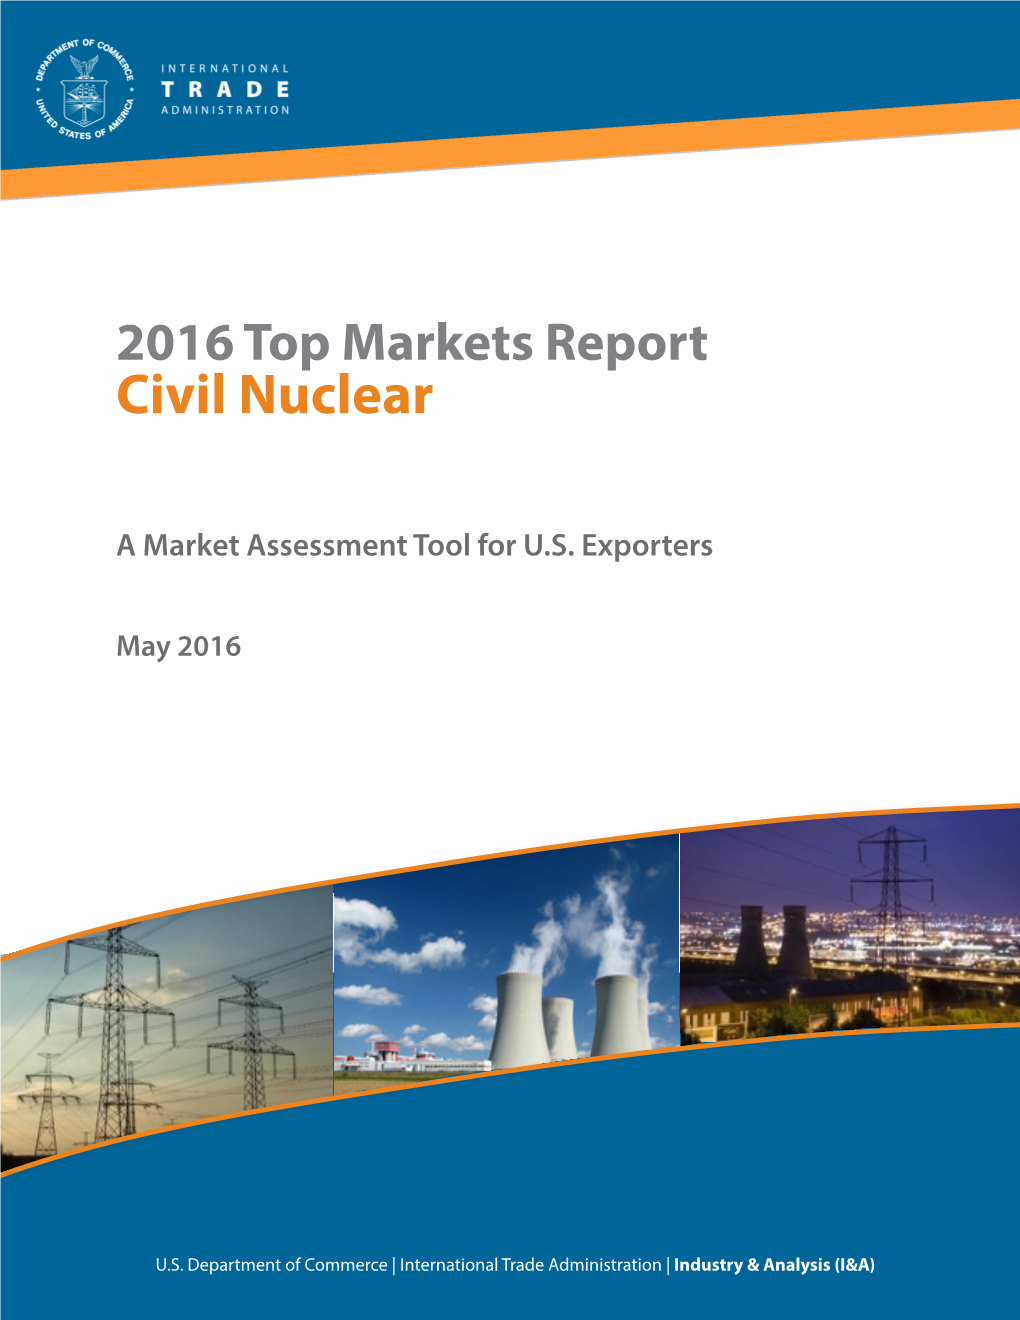 2016 Top Markets Report: Civil Nuclear